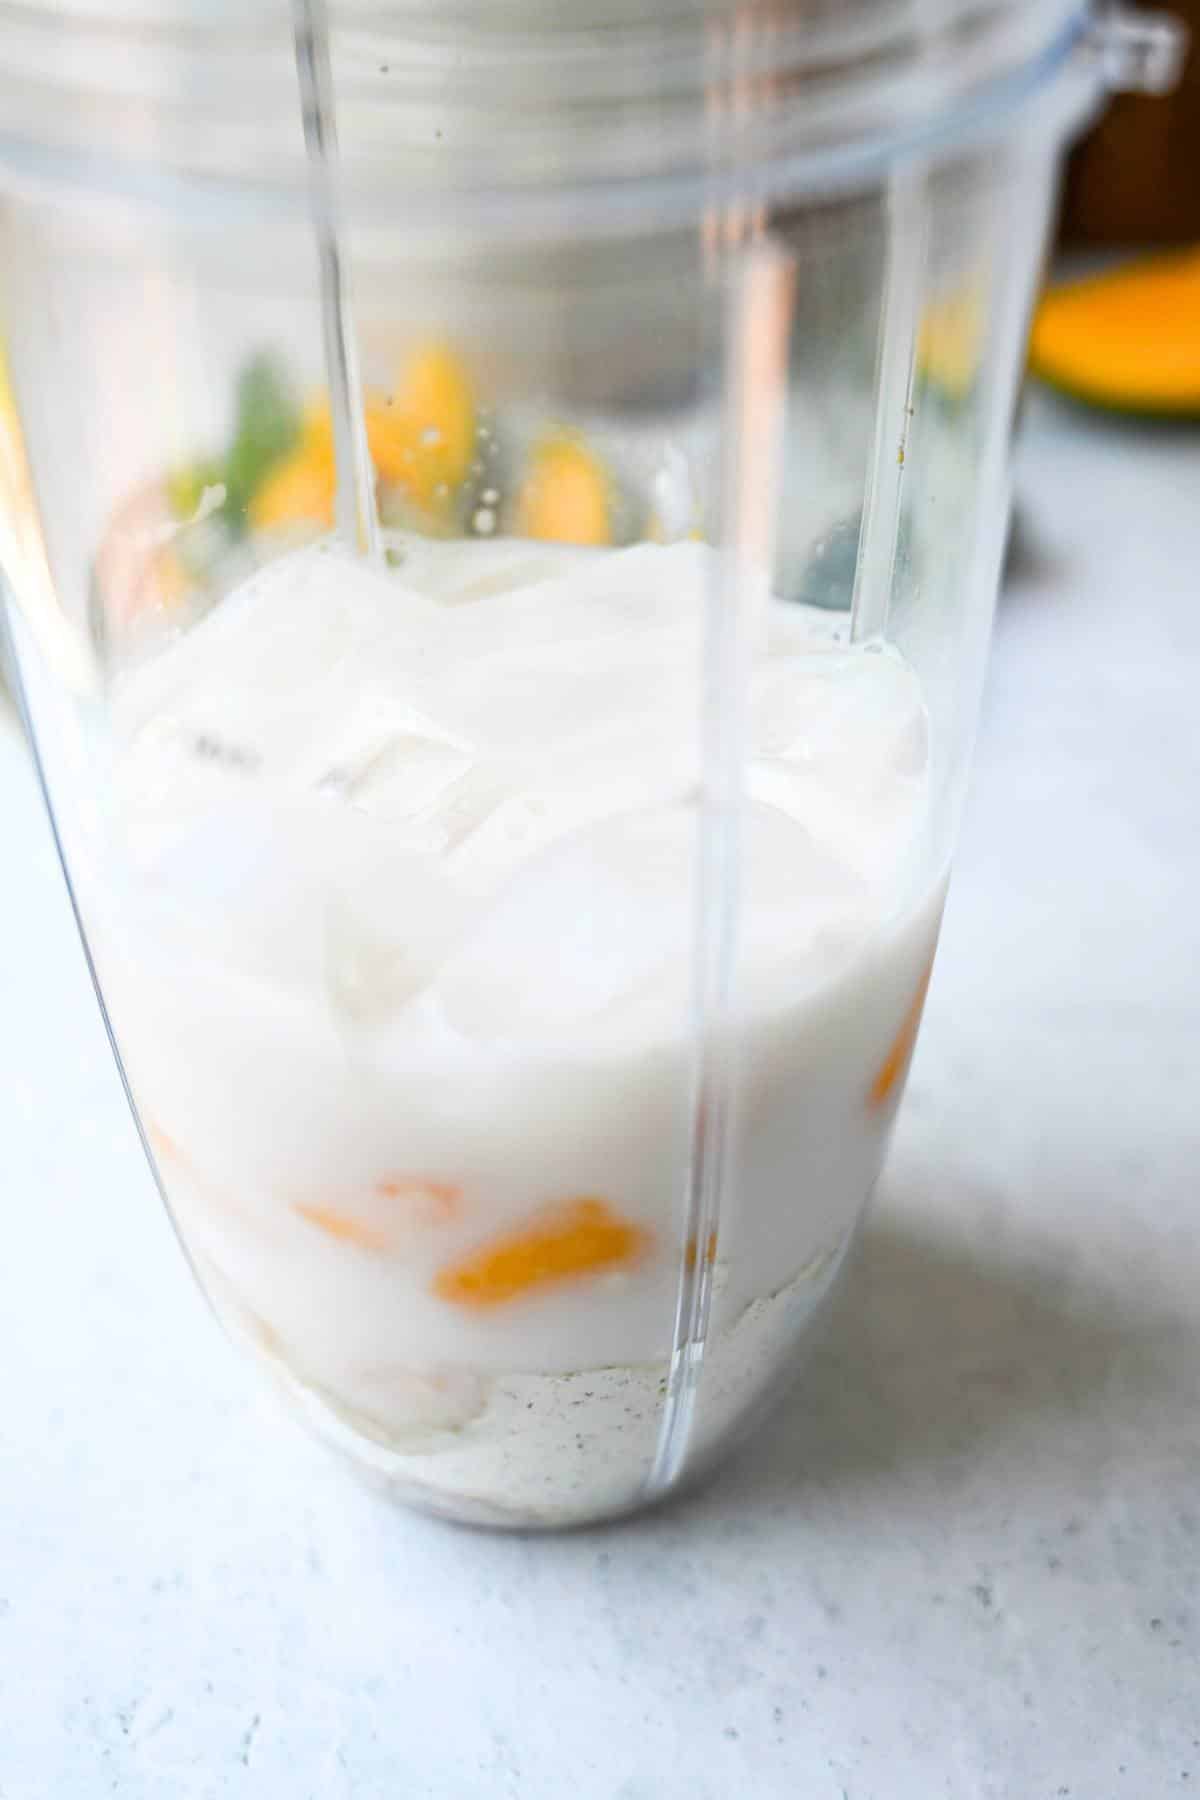 mango shake ingredients in a blender cup